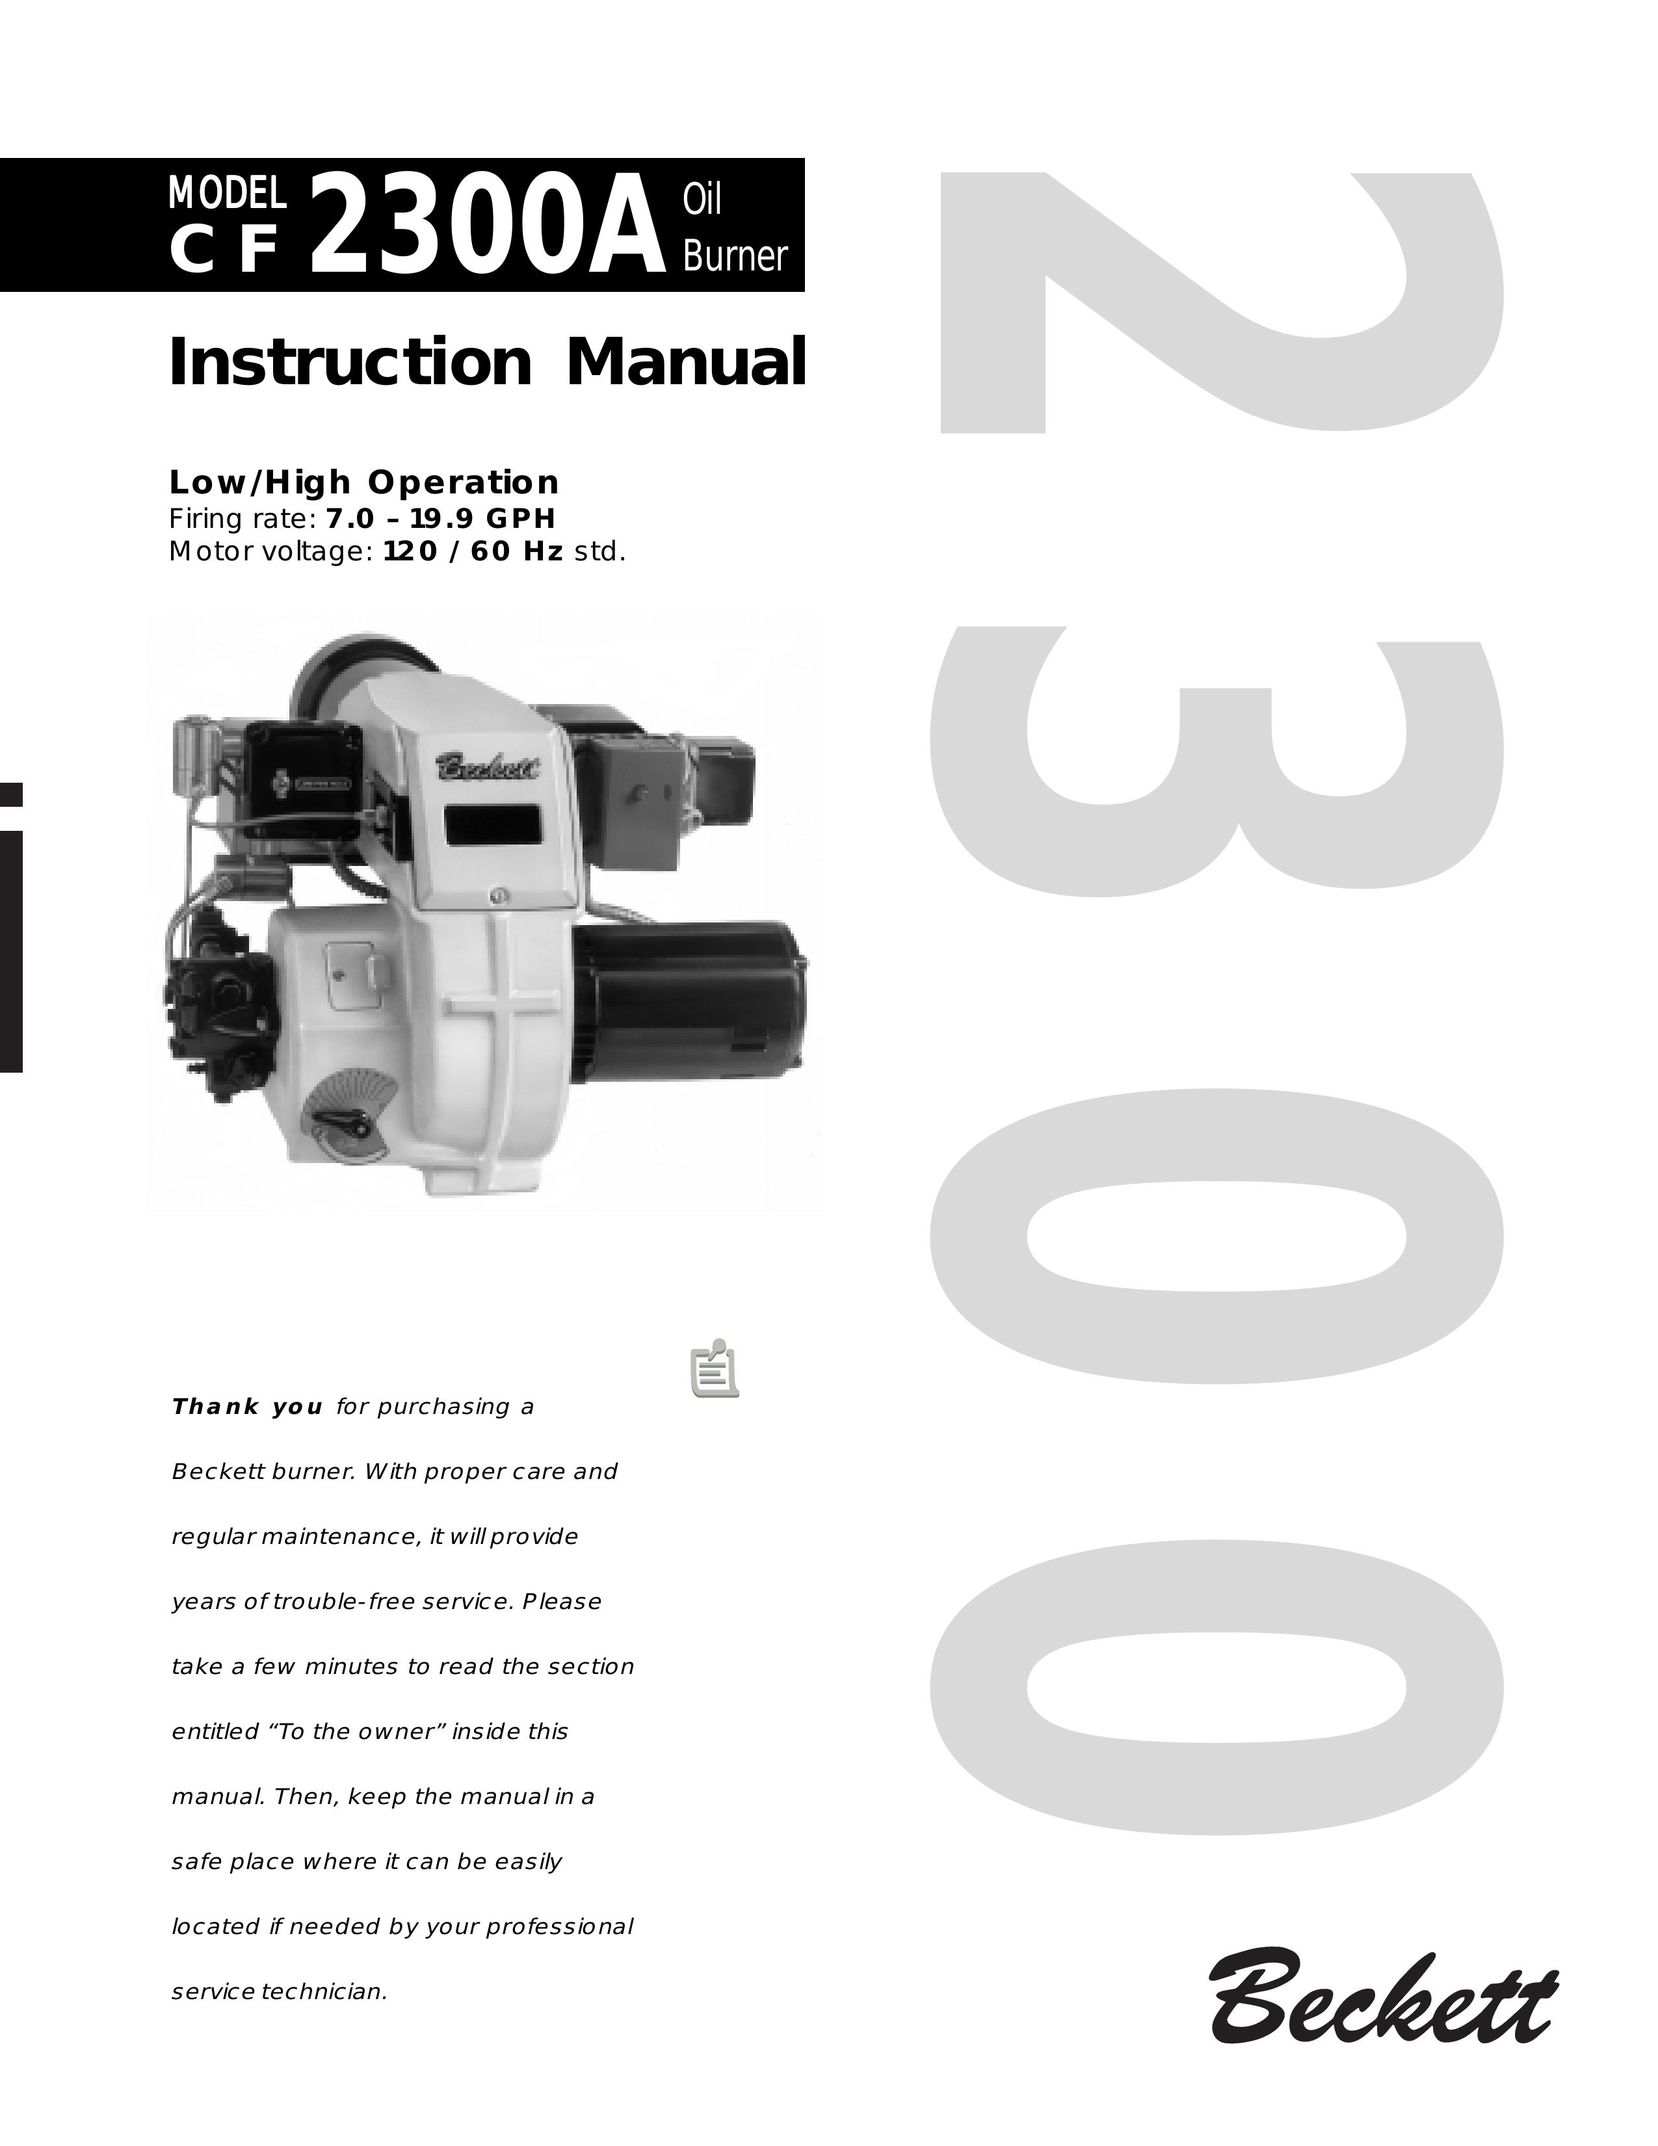 Beckett CF 2300A Burner User Manual